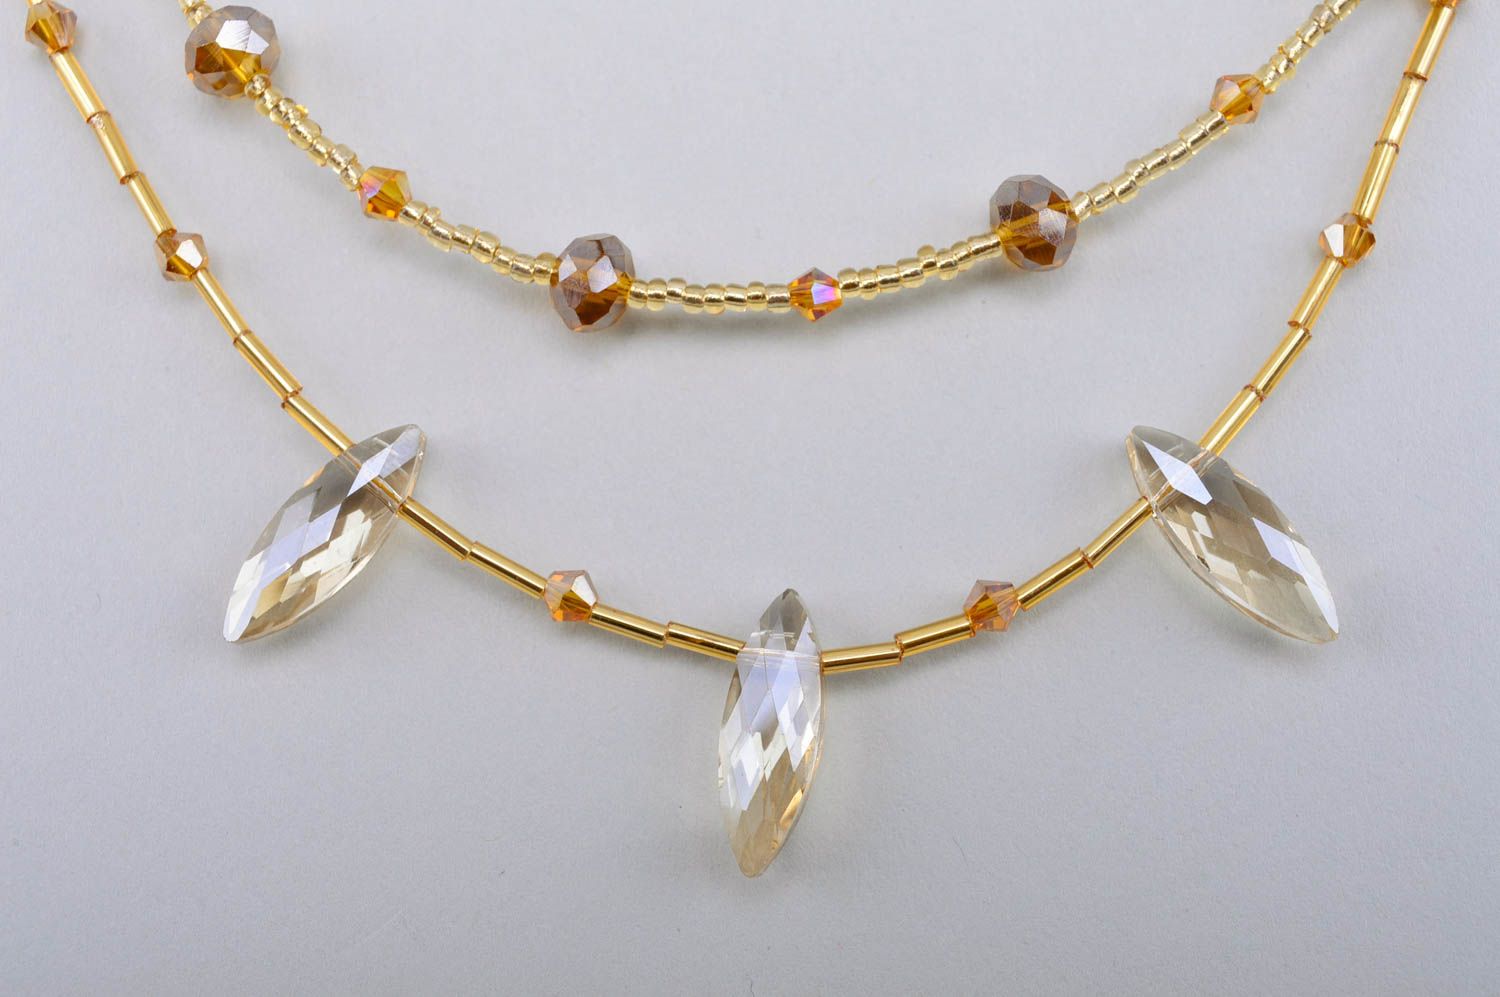 Unusual handmade beaded necklace design artisan jewelry fashion accessories photo 3